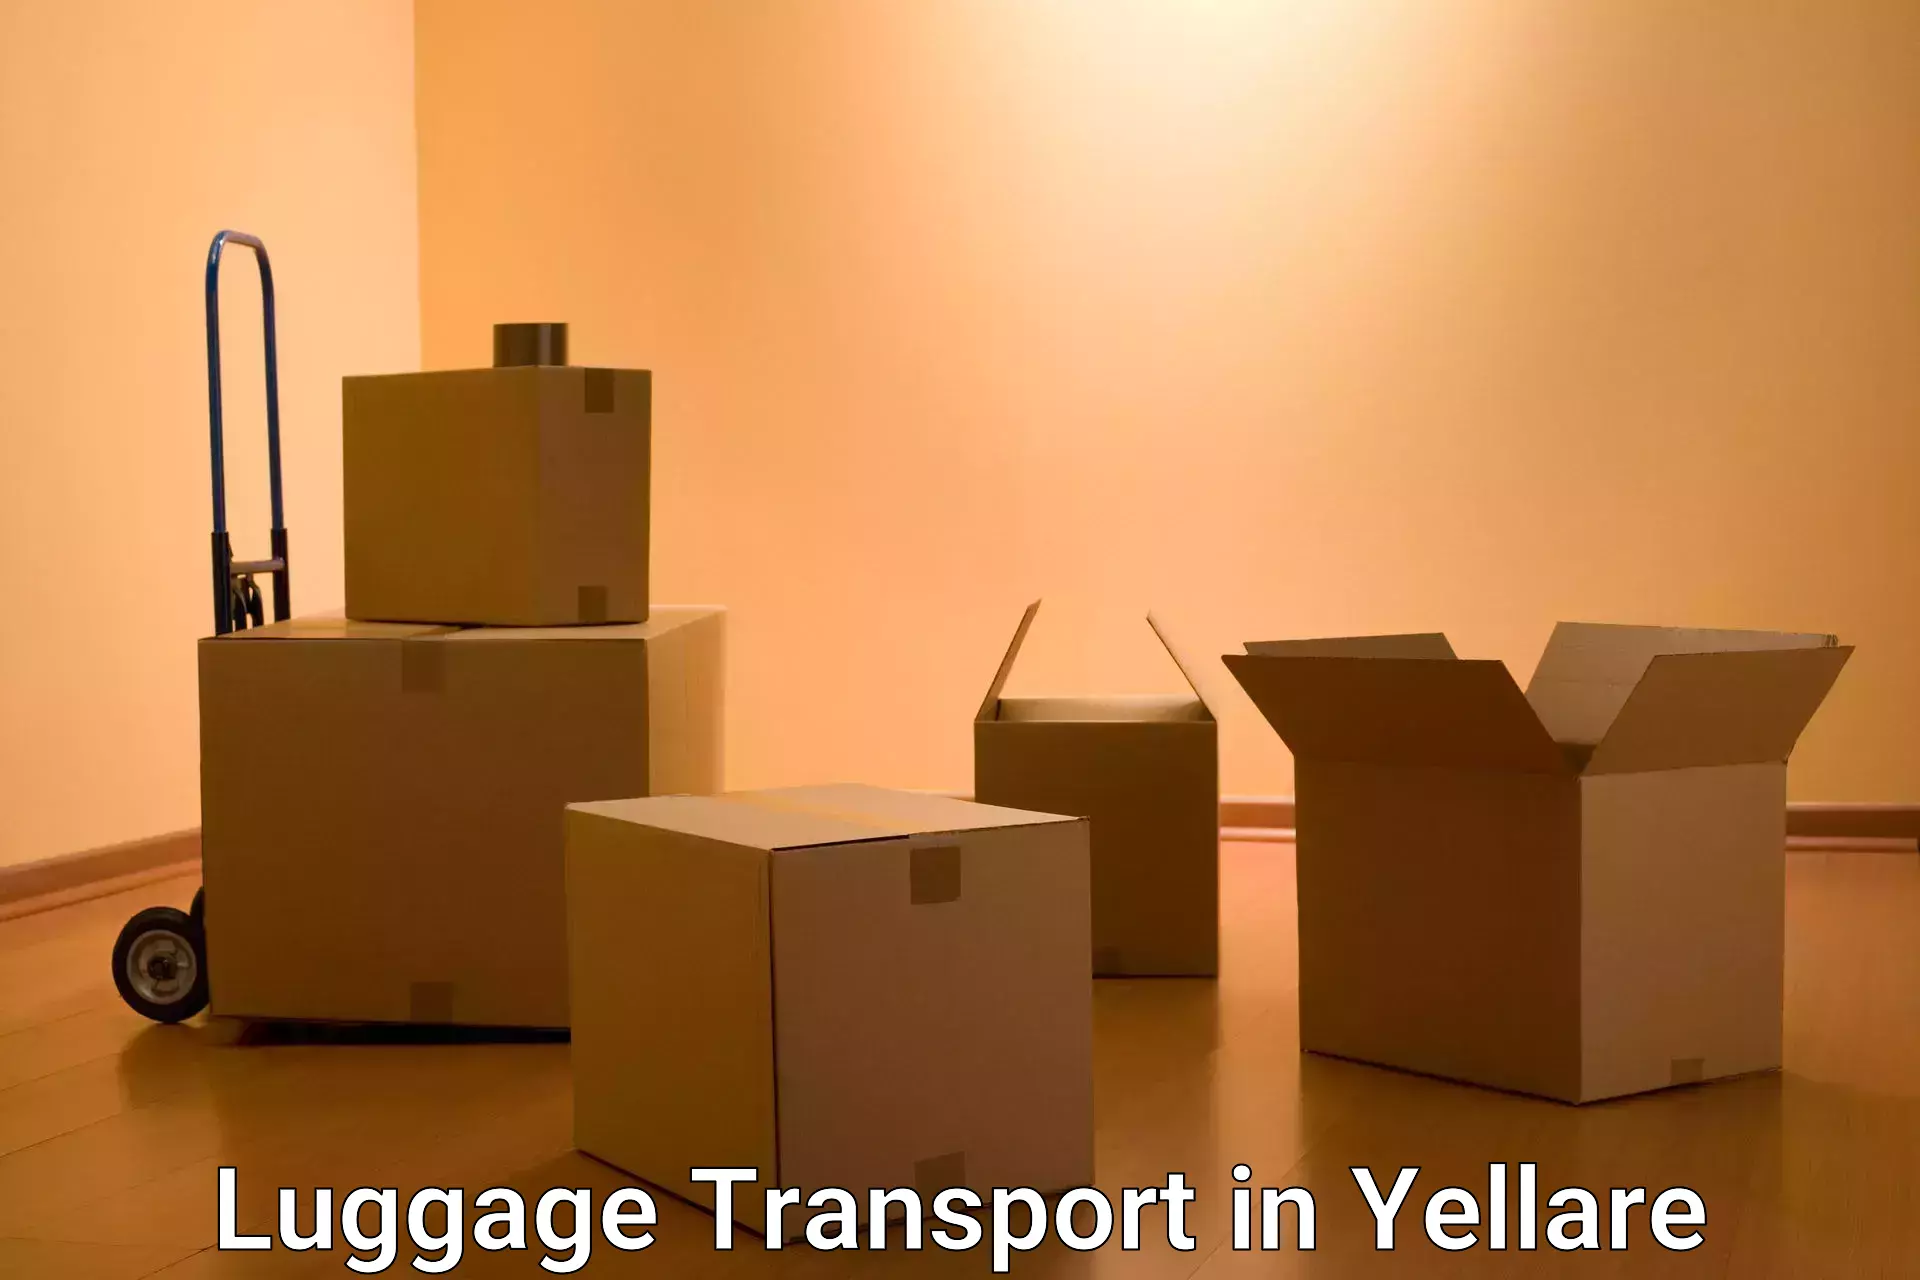 Luggage shipping service in Yellare